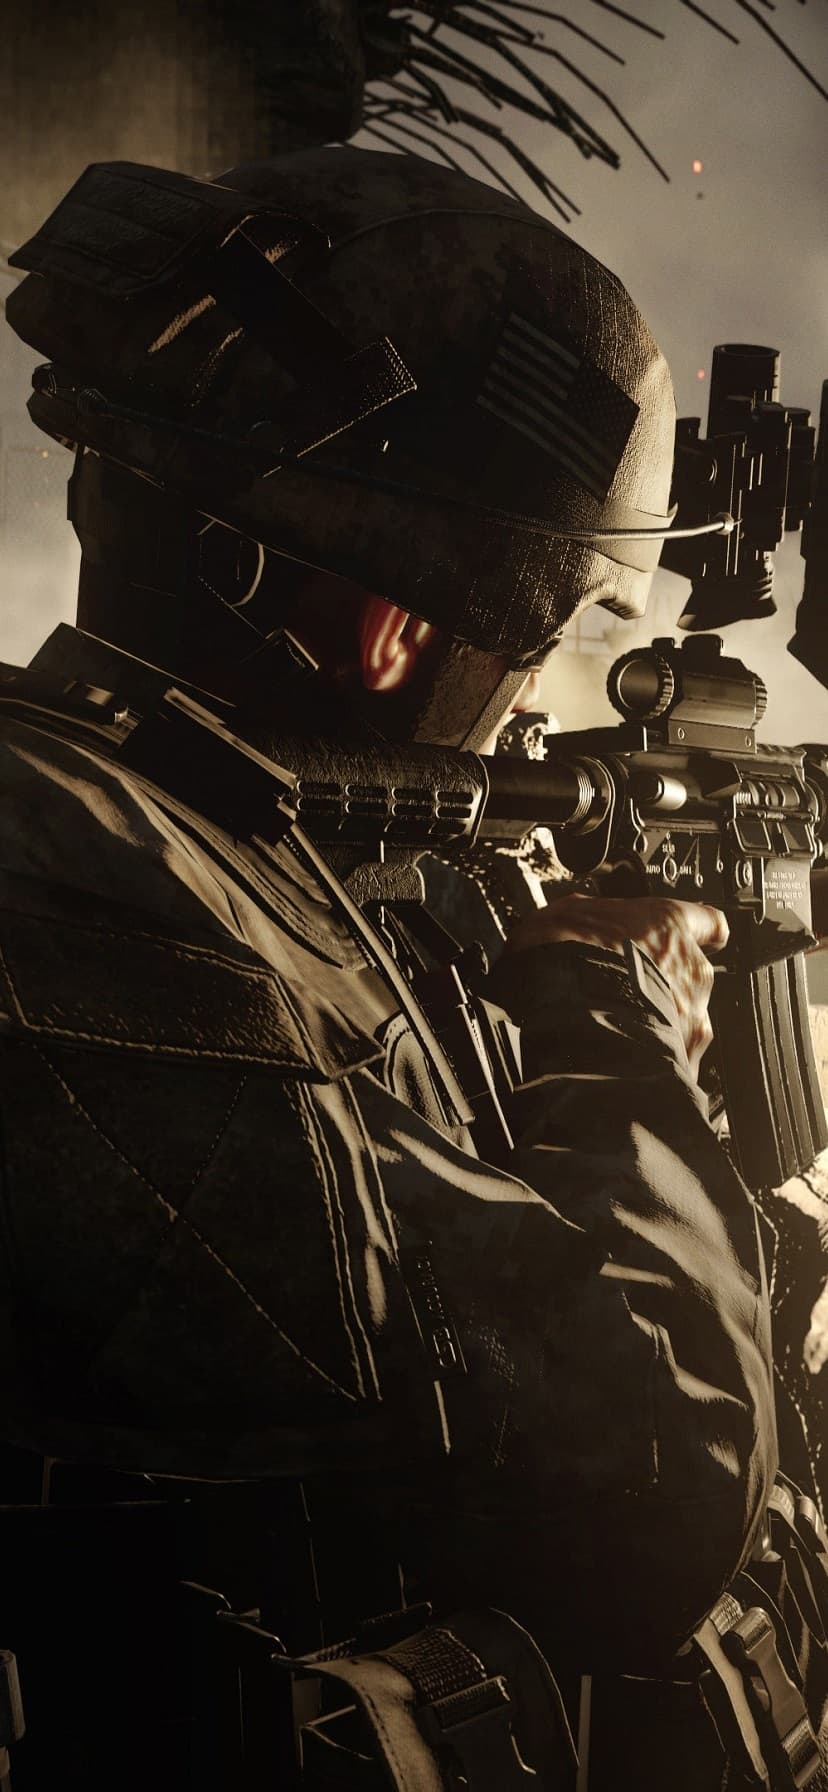 Call of Duty: Modern Warfare 2 is teasing a Singapore setting